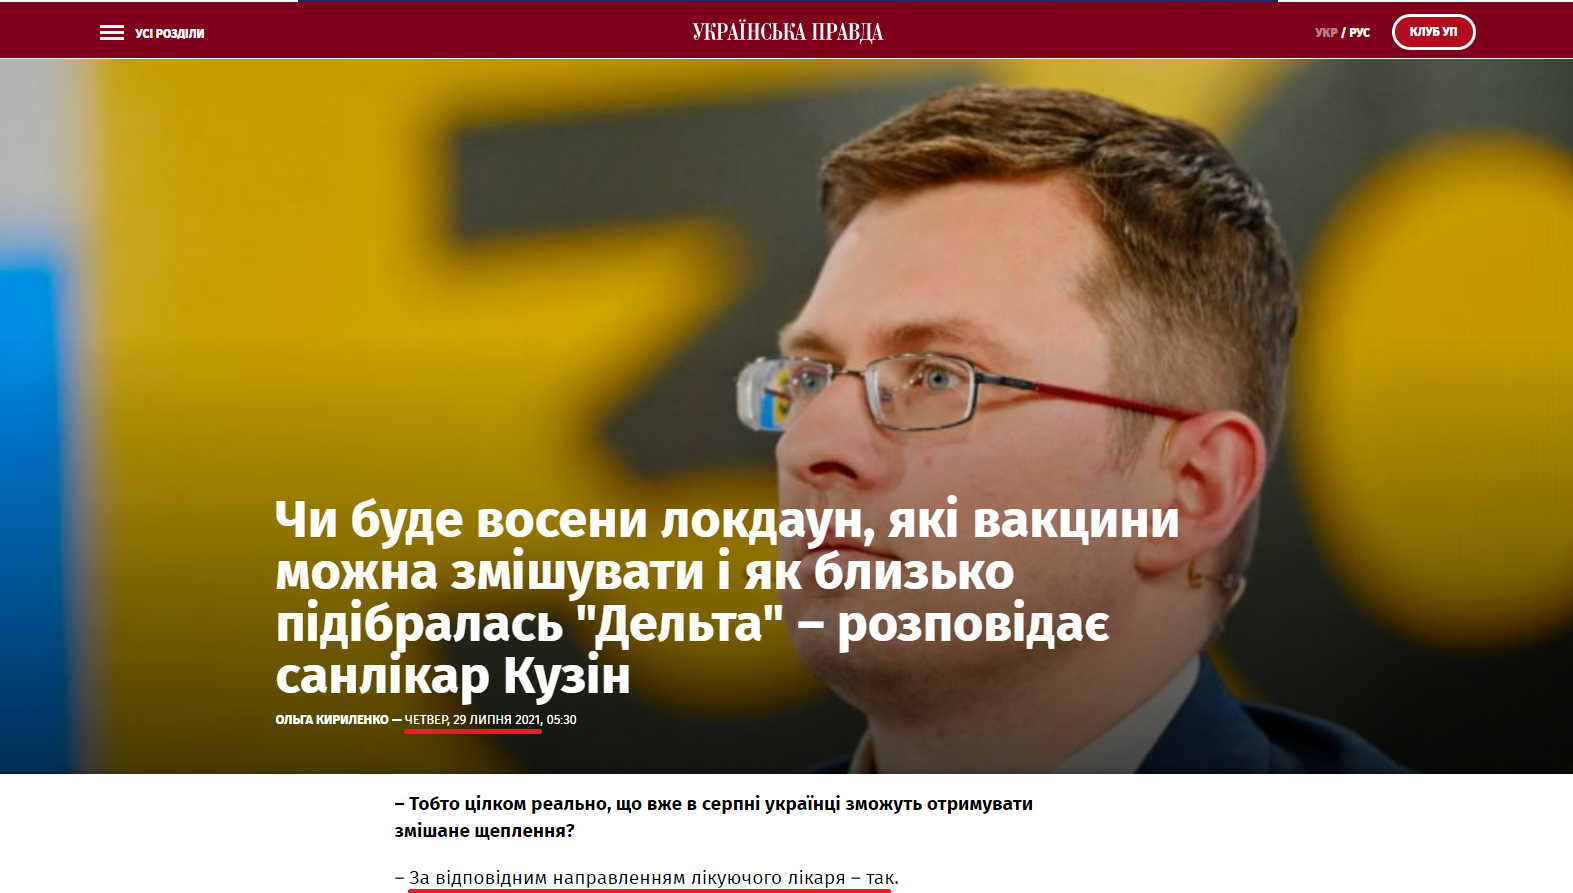 https://www.pravda.com.ua/articles/2021/07/29/7302044/